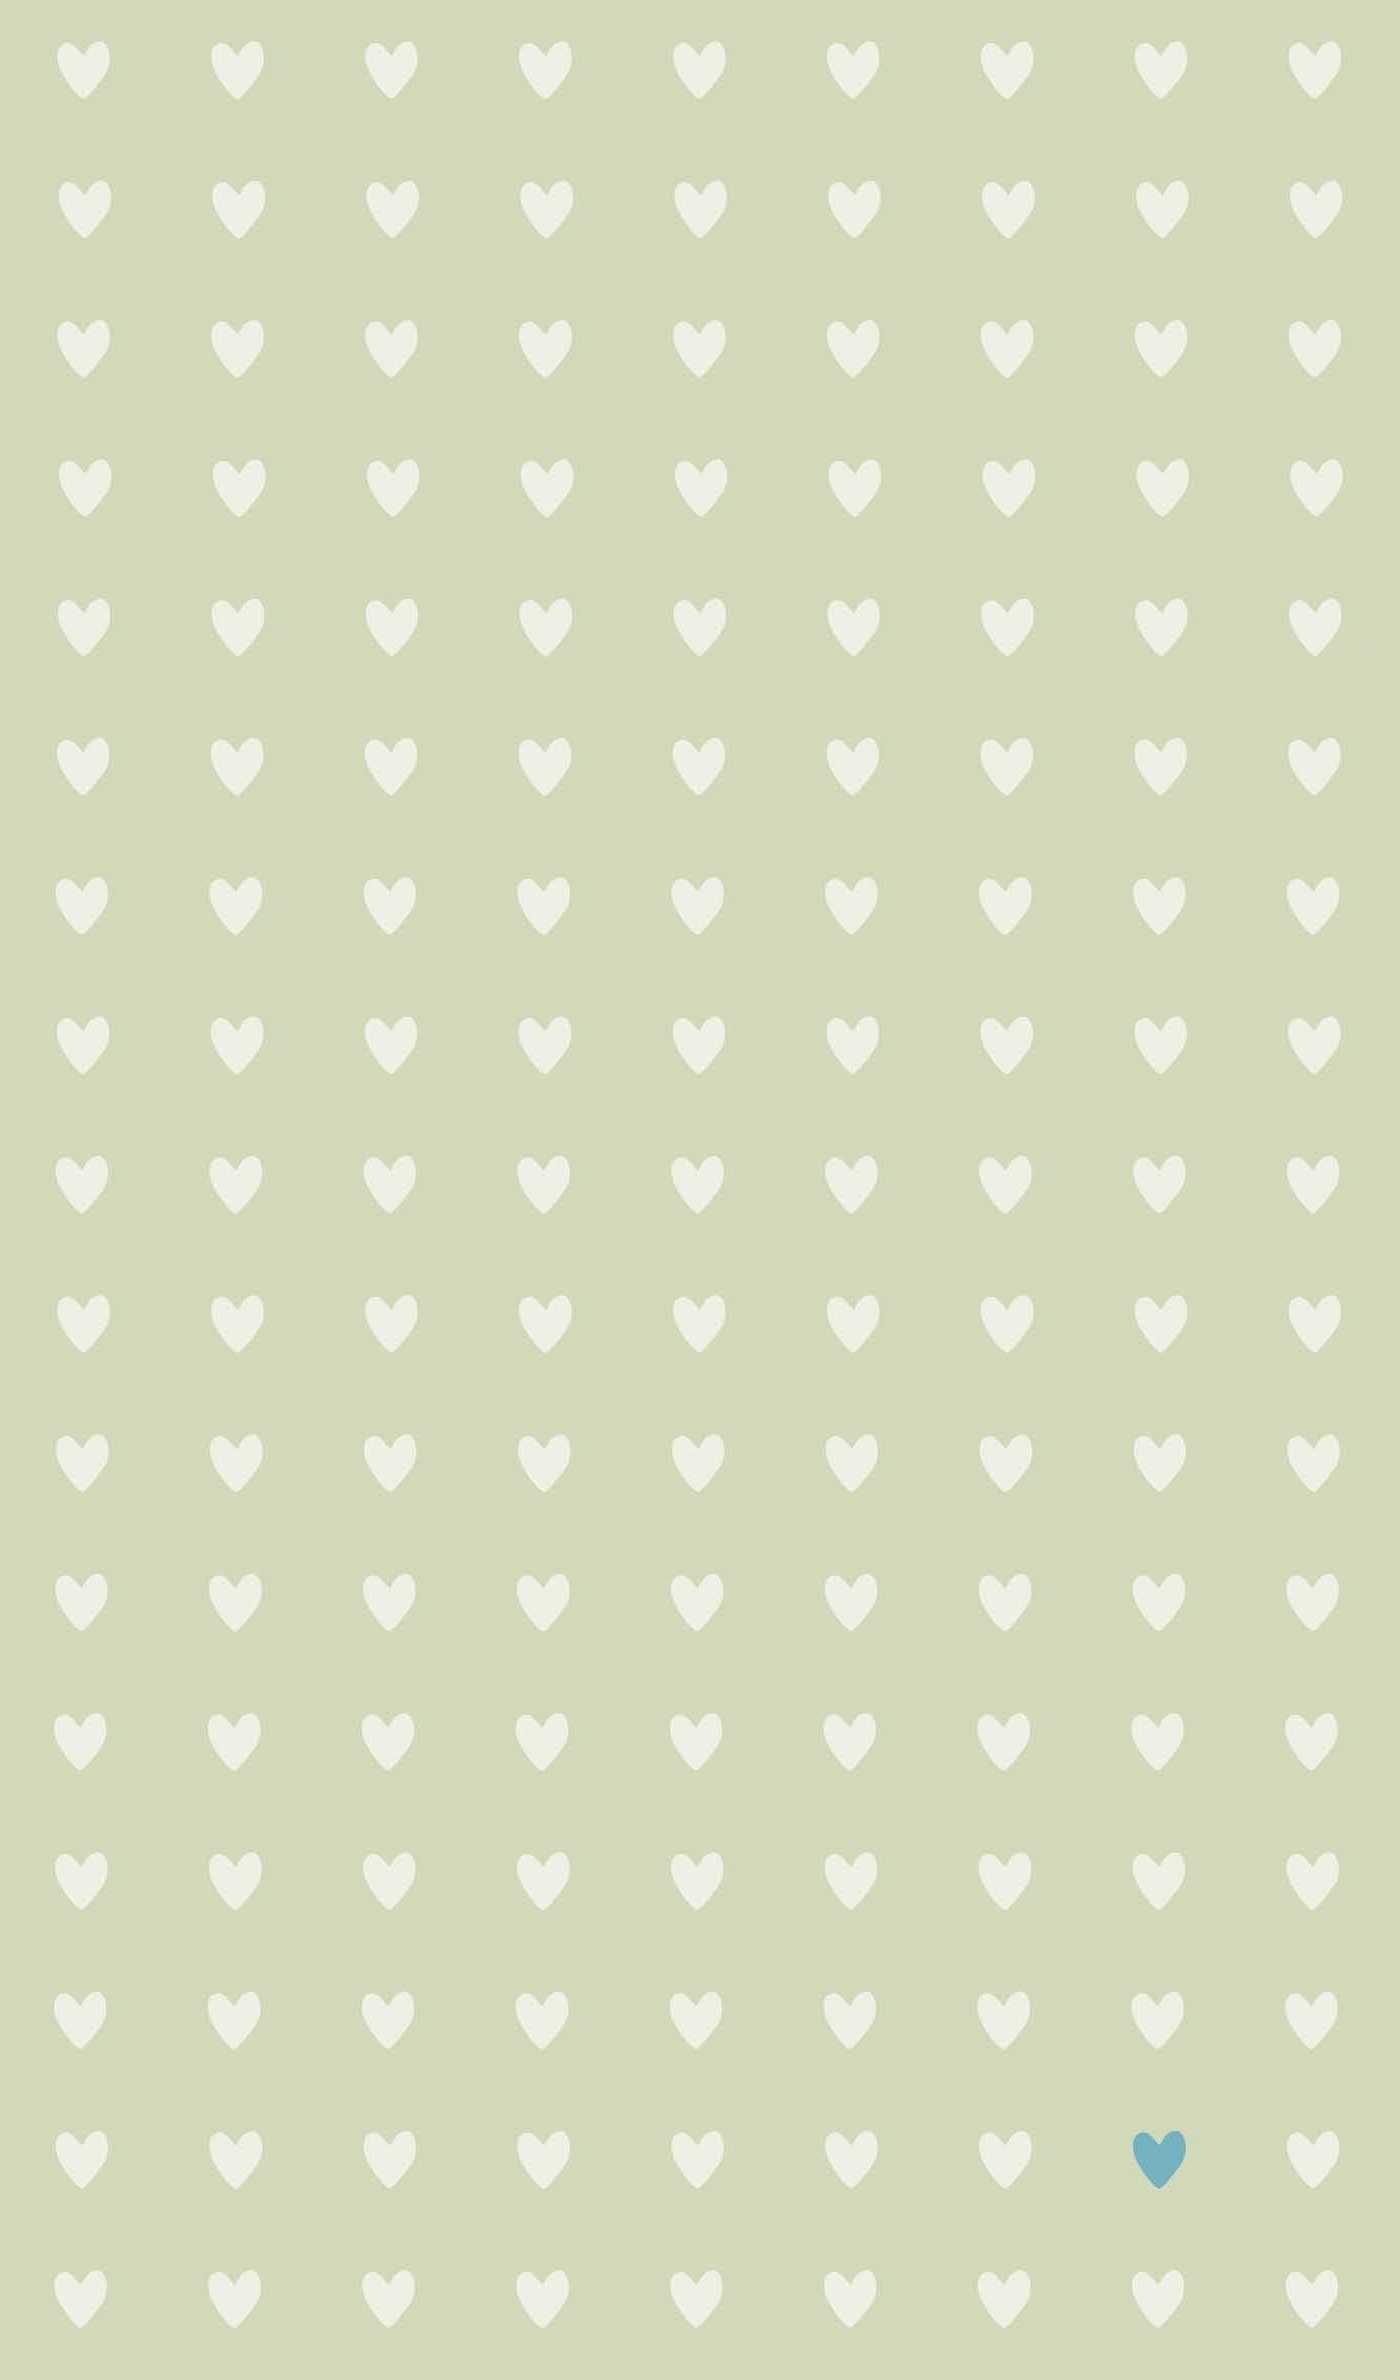 30 Free December Wallpapers  Sage Green Background for PC  Laptop I Take  You  Wedding Readings  Wedding Ideas  Wedding Dresses  Wedding Theme